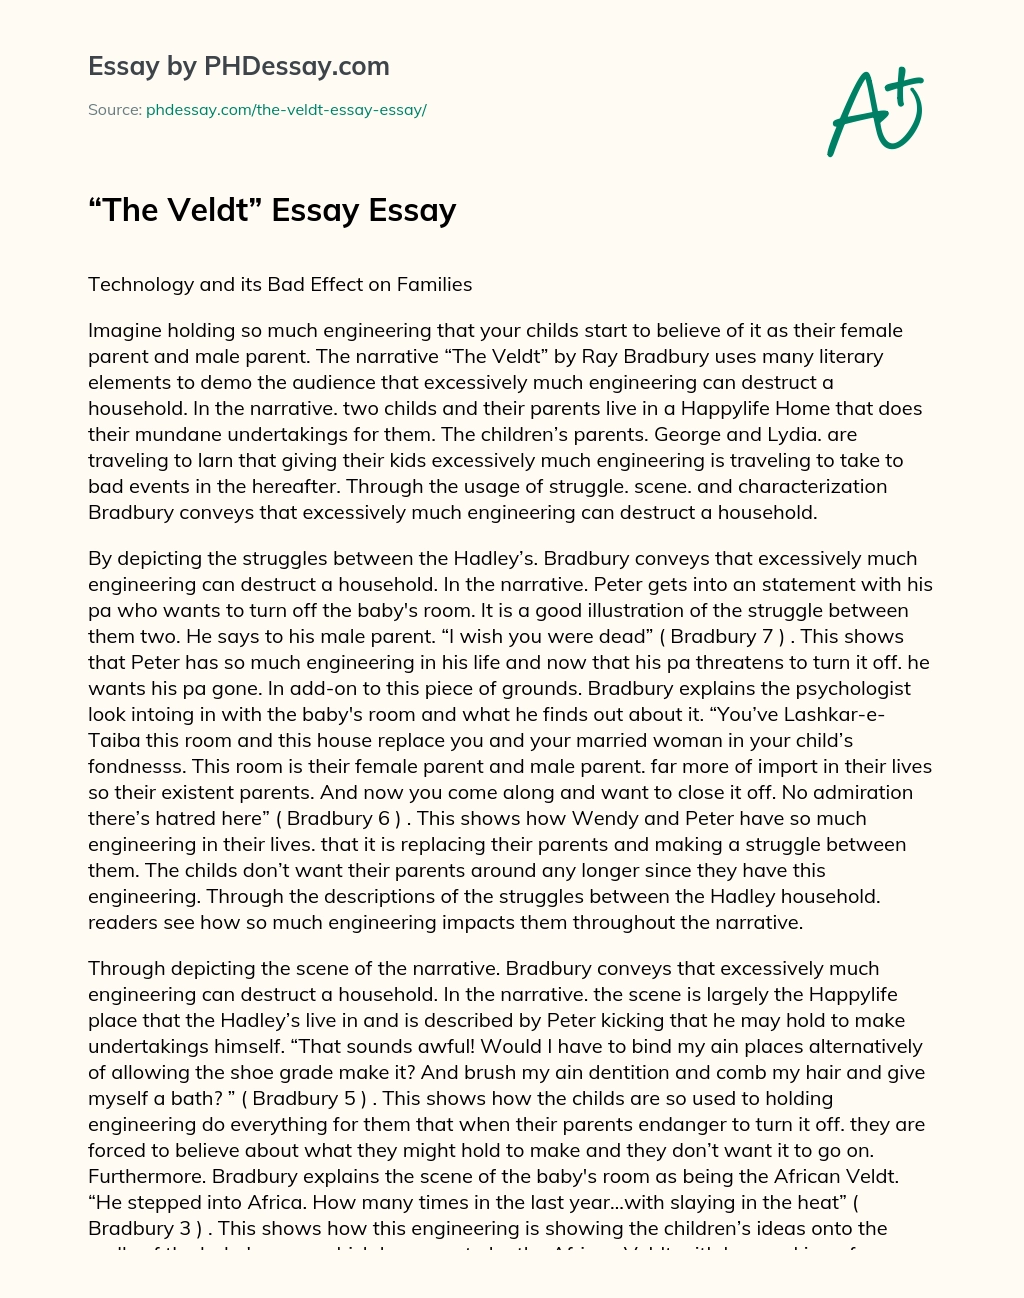 The Veldt Essay Essay essay